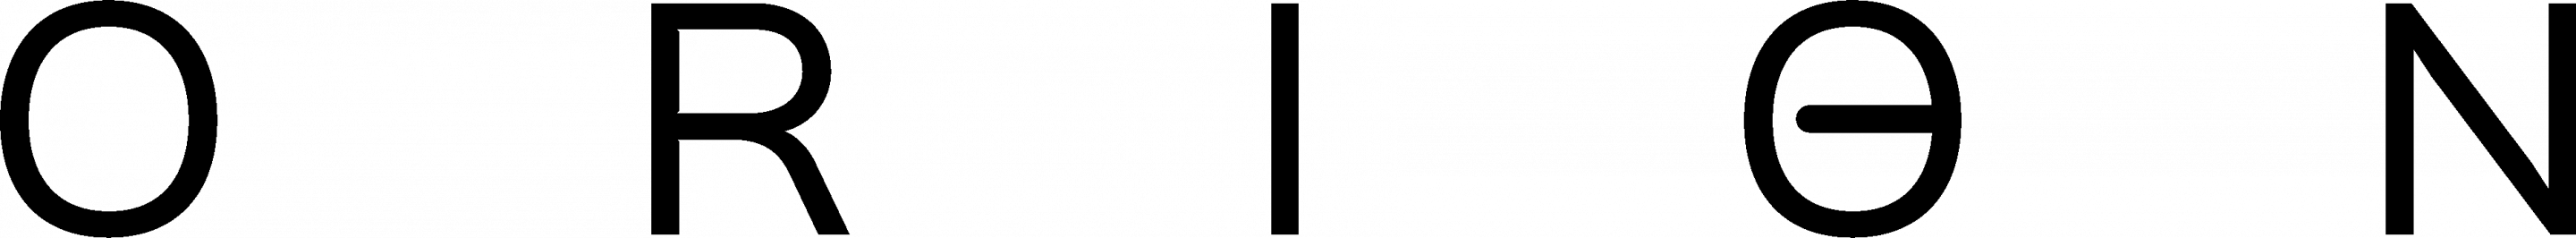 Logo Prymahl Orion